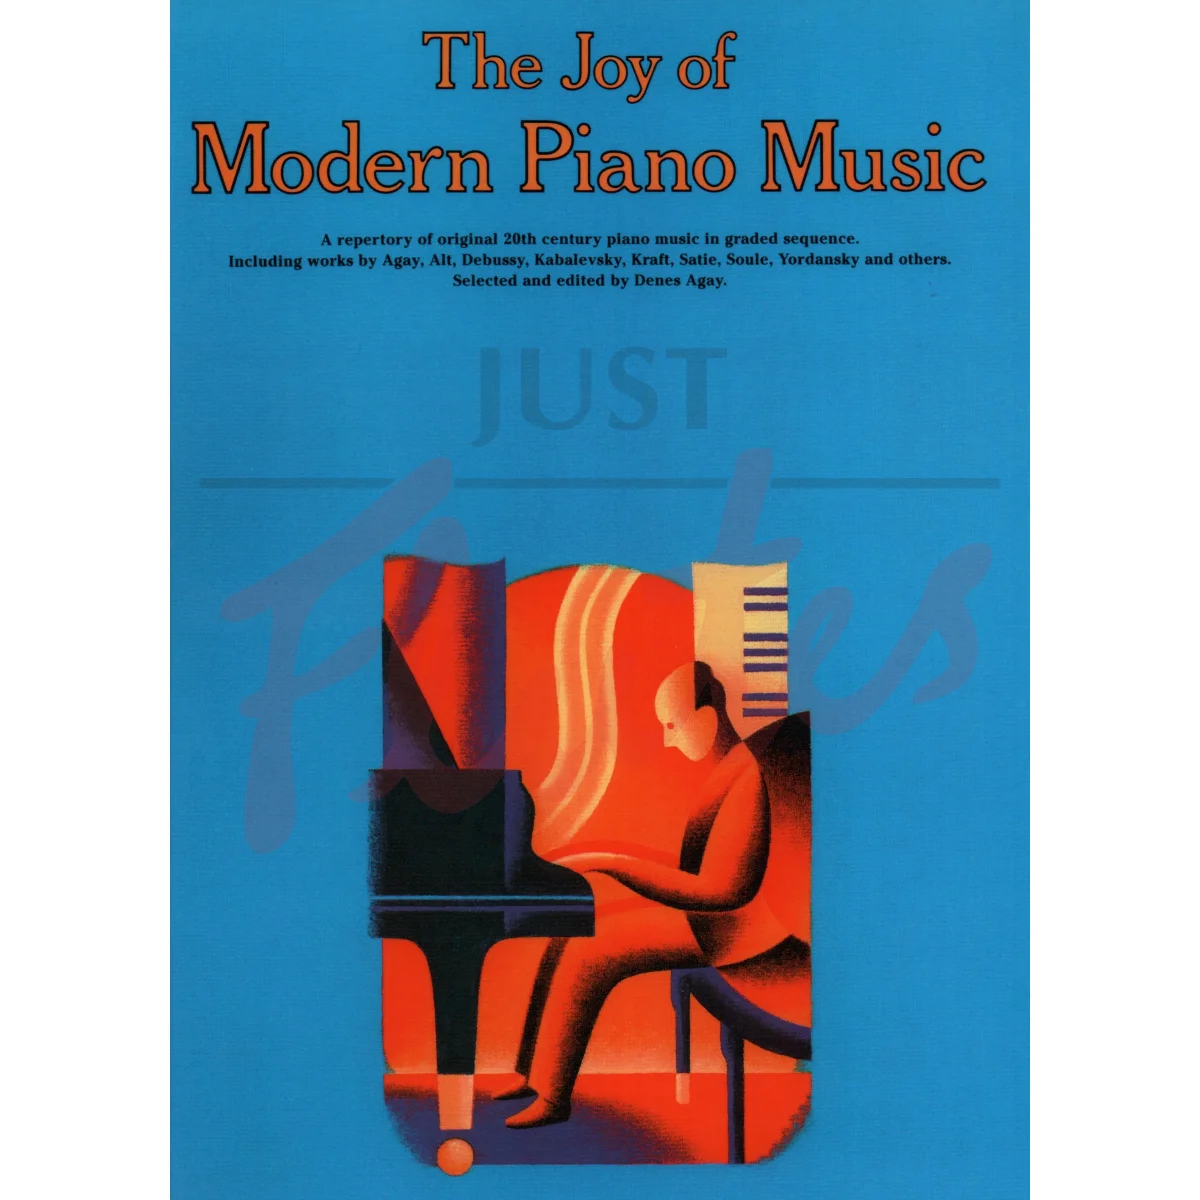 The Joy of Modern Piano Music